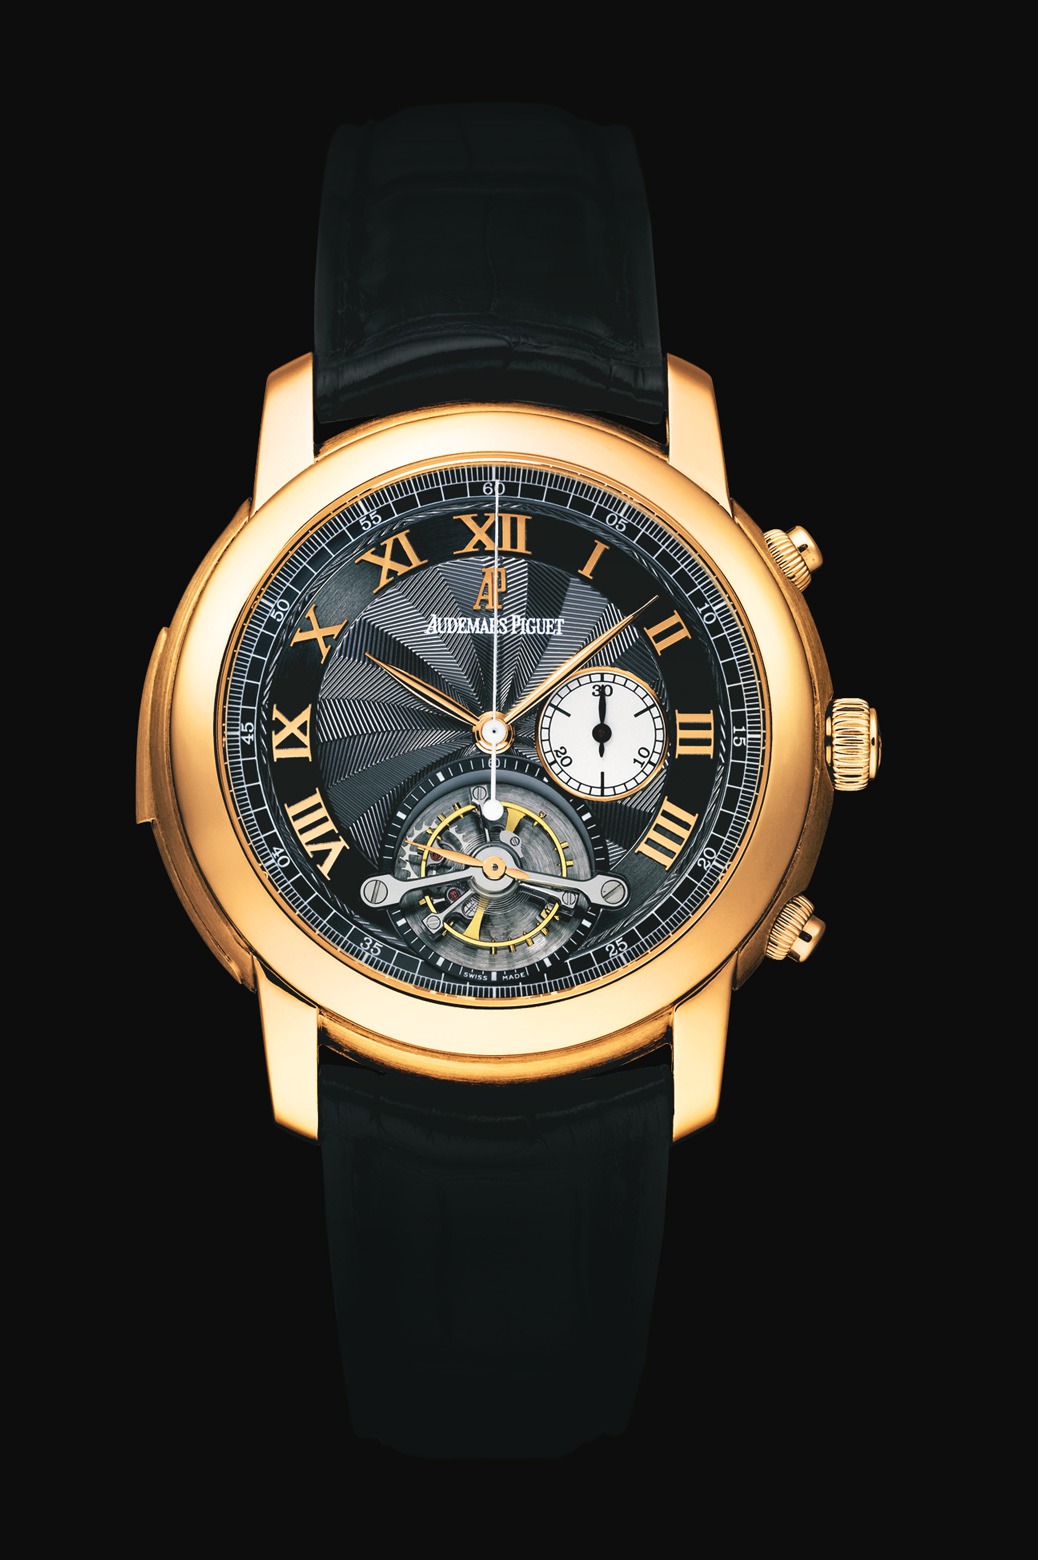 Audemars Piguet Jules Audemars Minute Repeater Chronograph Tourbillon Pink Gold watch REF: 26050OR.OO.D002CR.01 - Click Image to Close